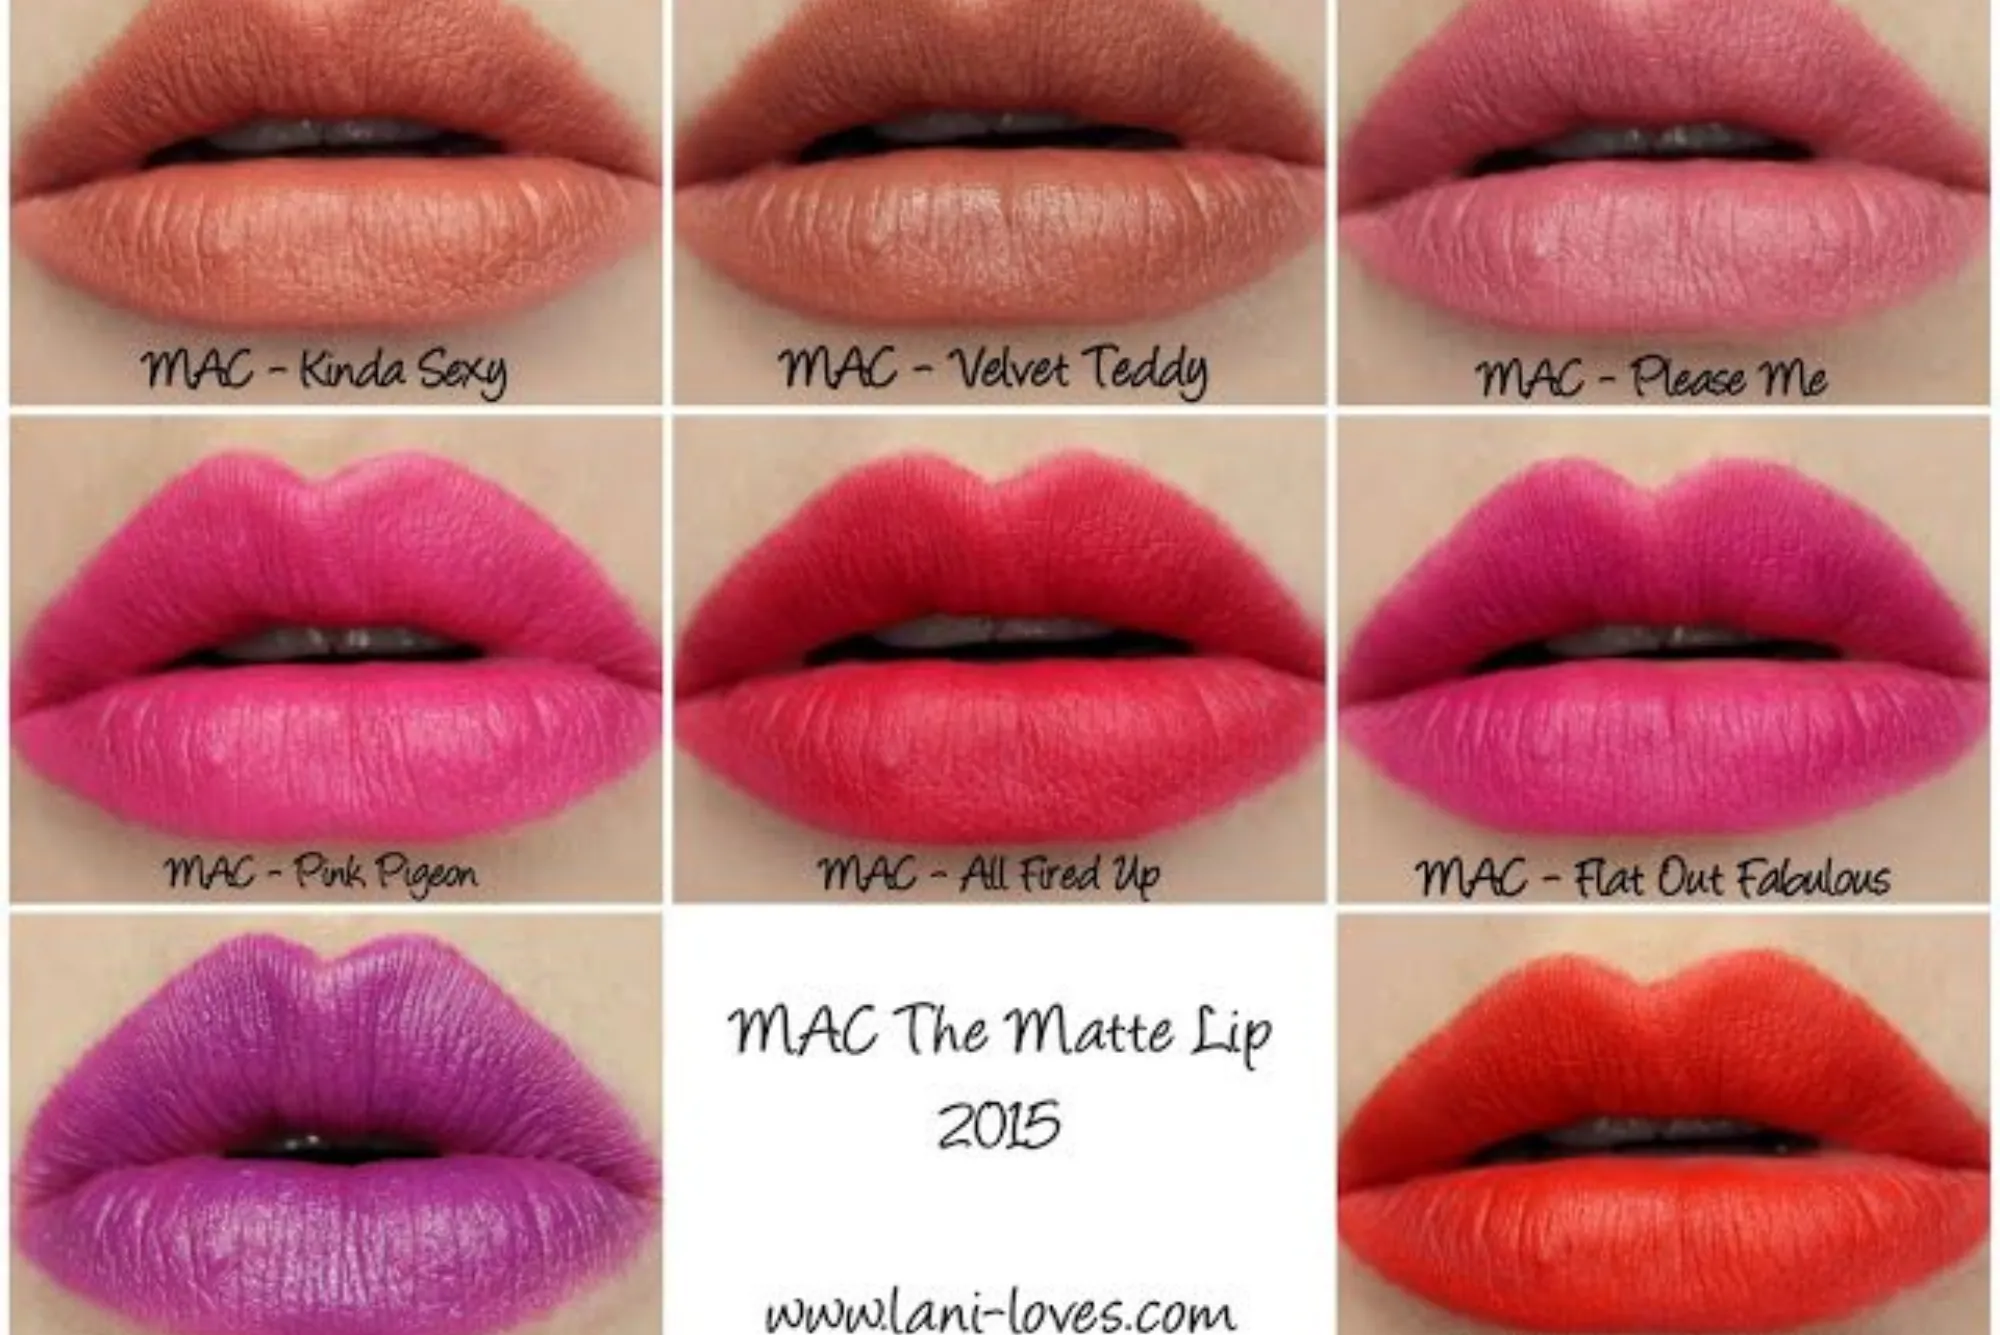 why is mac lipstick so popular